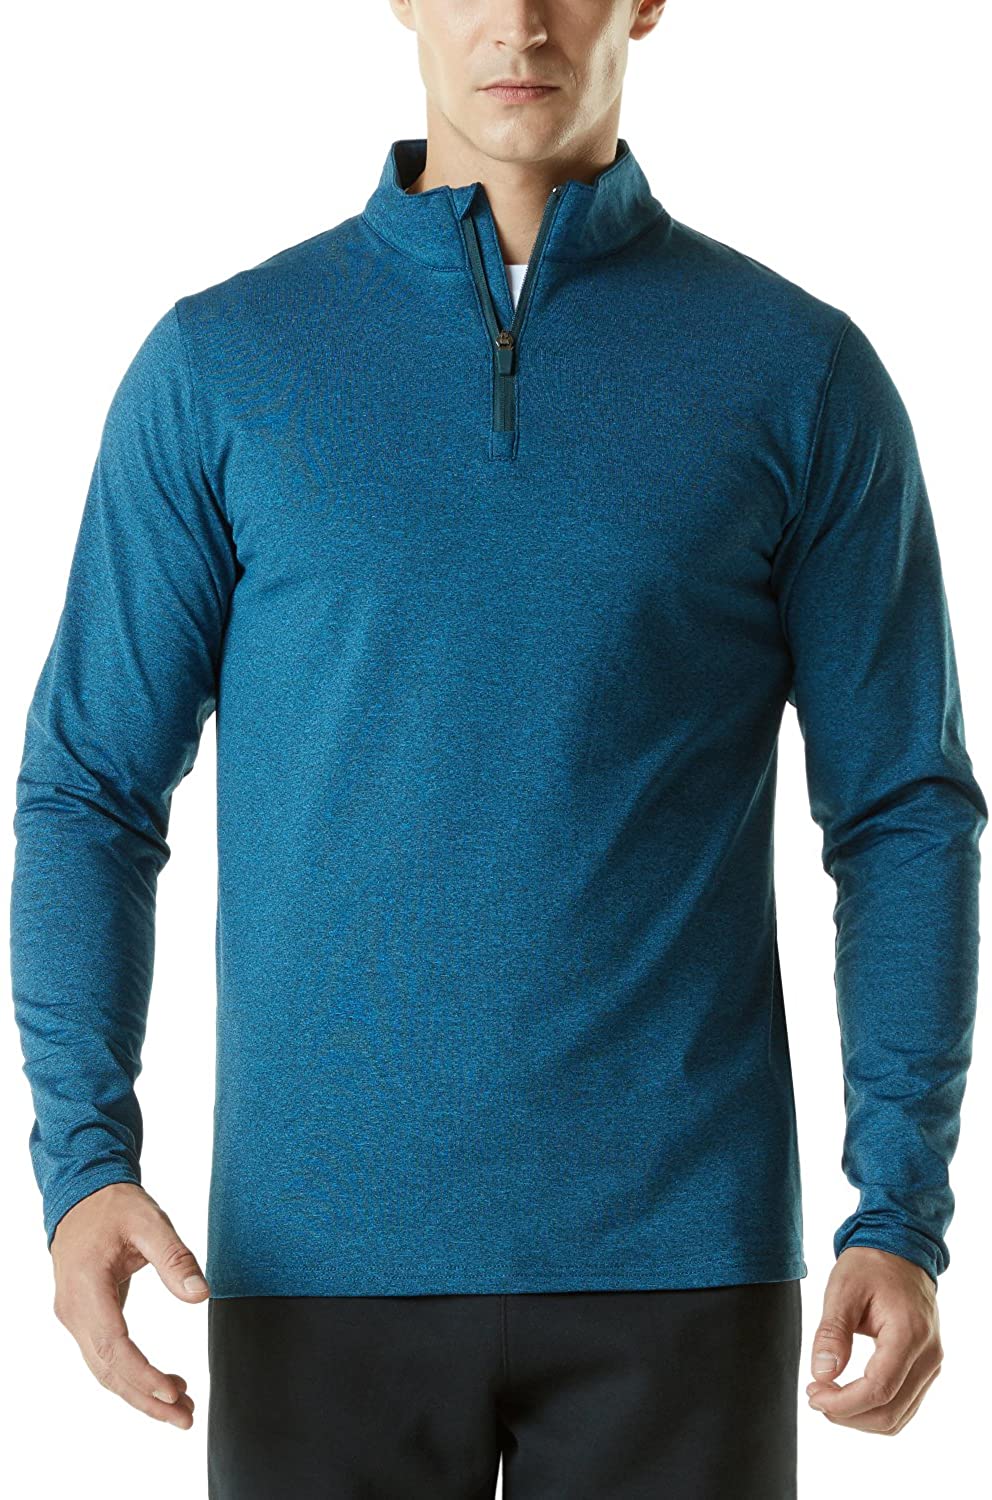 TSLA Mens Quarter Zip Thermal Pullover Shirts Winter Fleece Lined Lightweight Running Sweatshirt